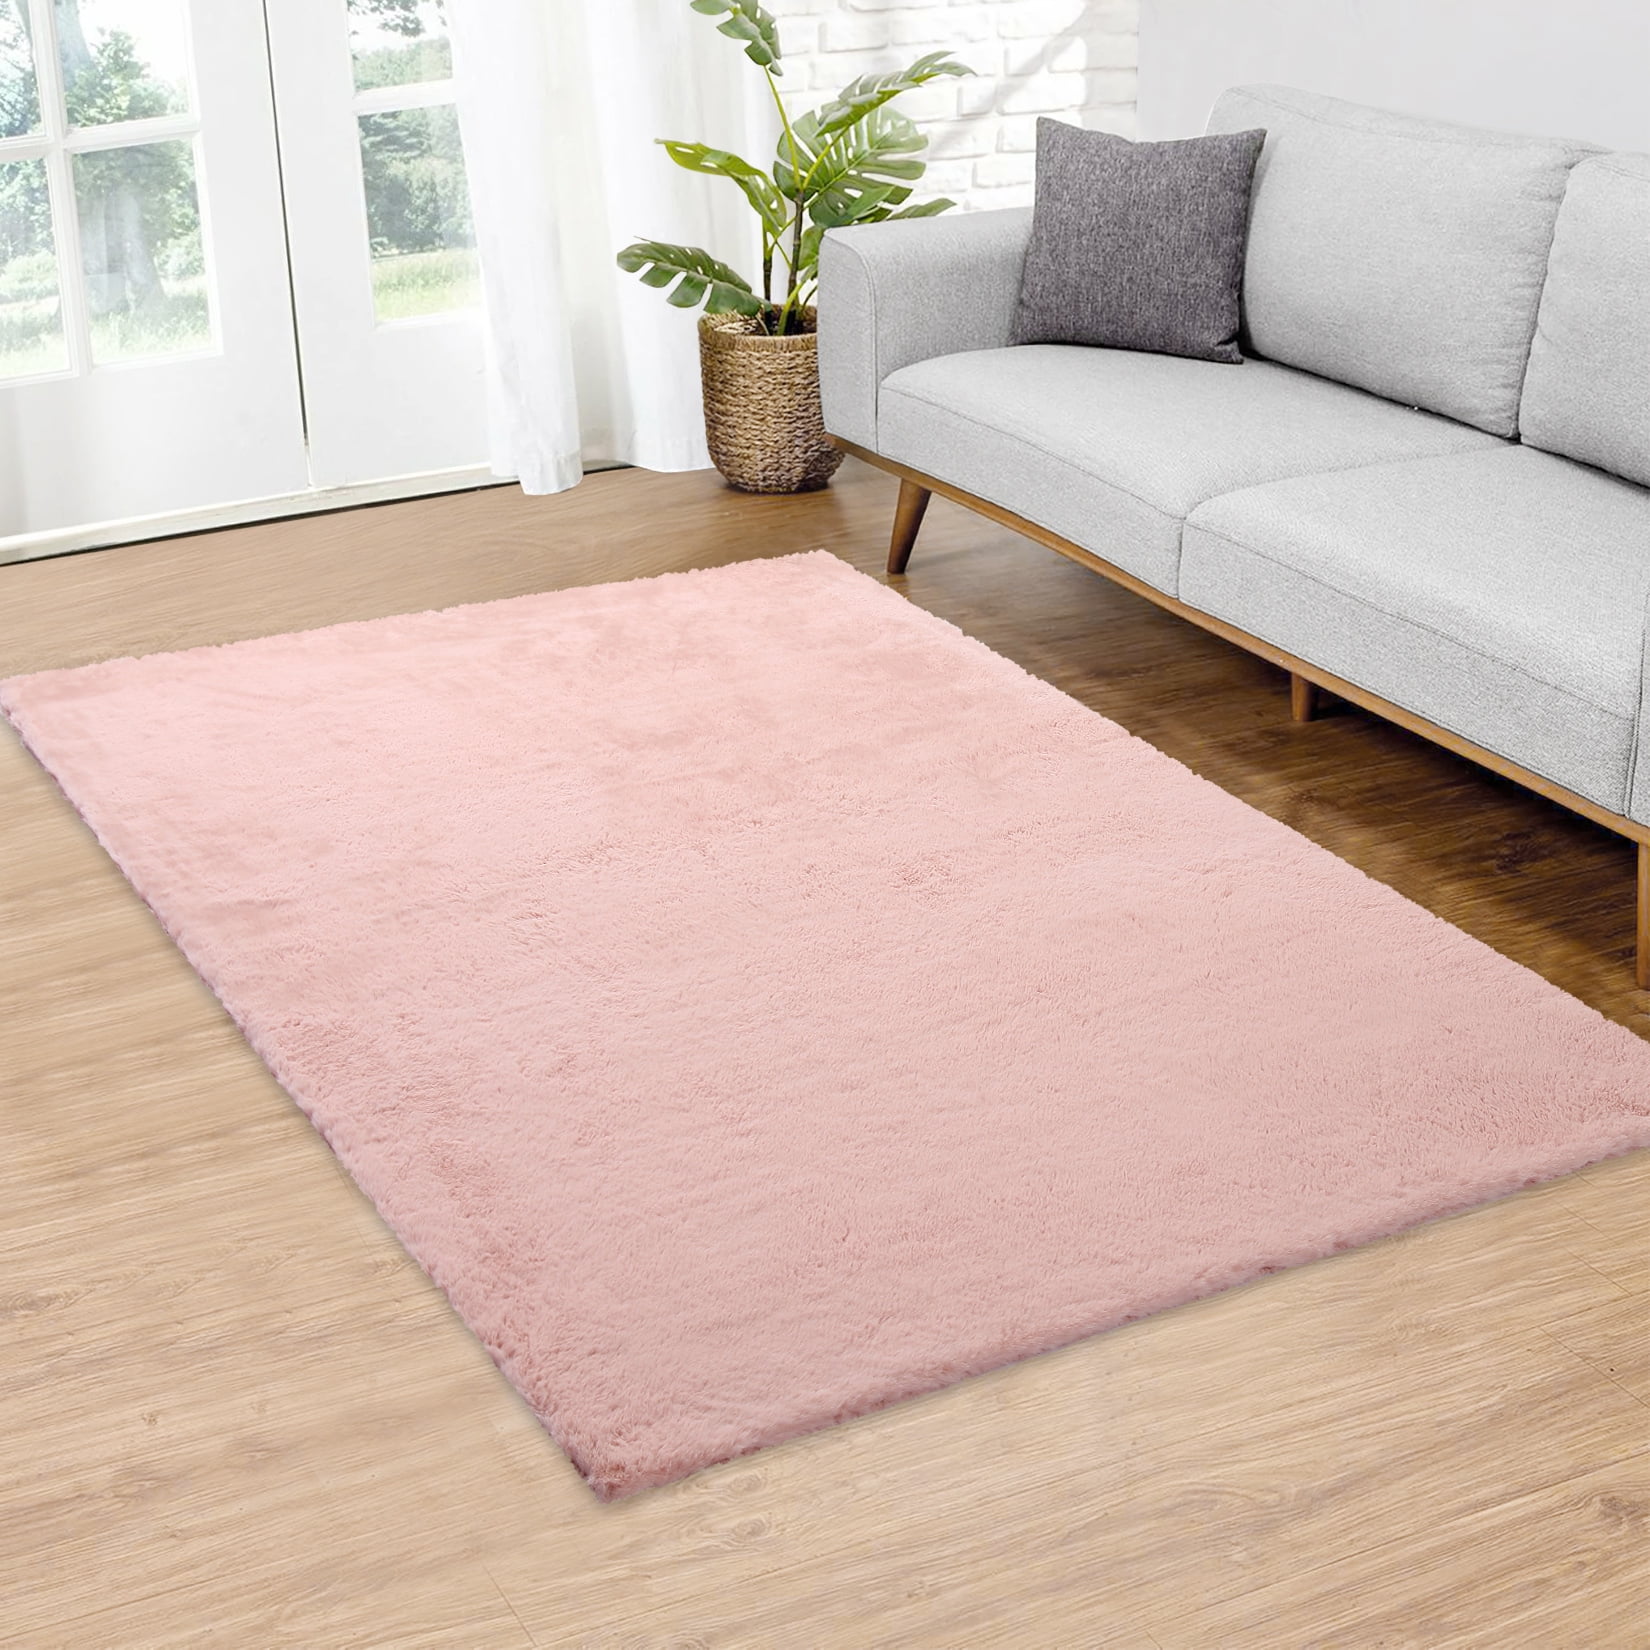 Kitsin Faux Rabbit Fur Area Rug Soft Chair Er Fuzzy Thick Carpet Mat For Bedroom Sofa Living Room Com